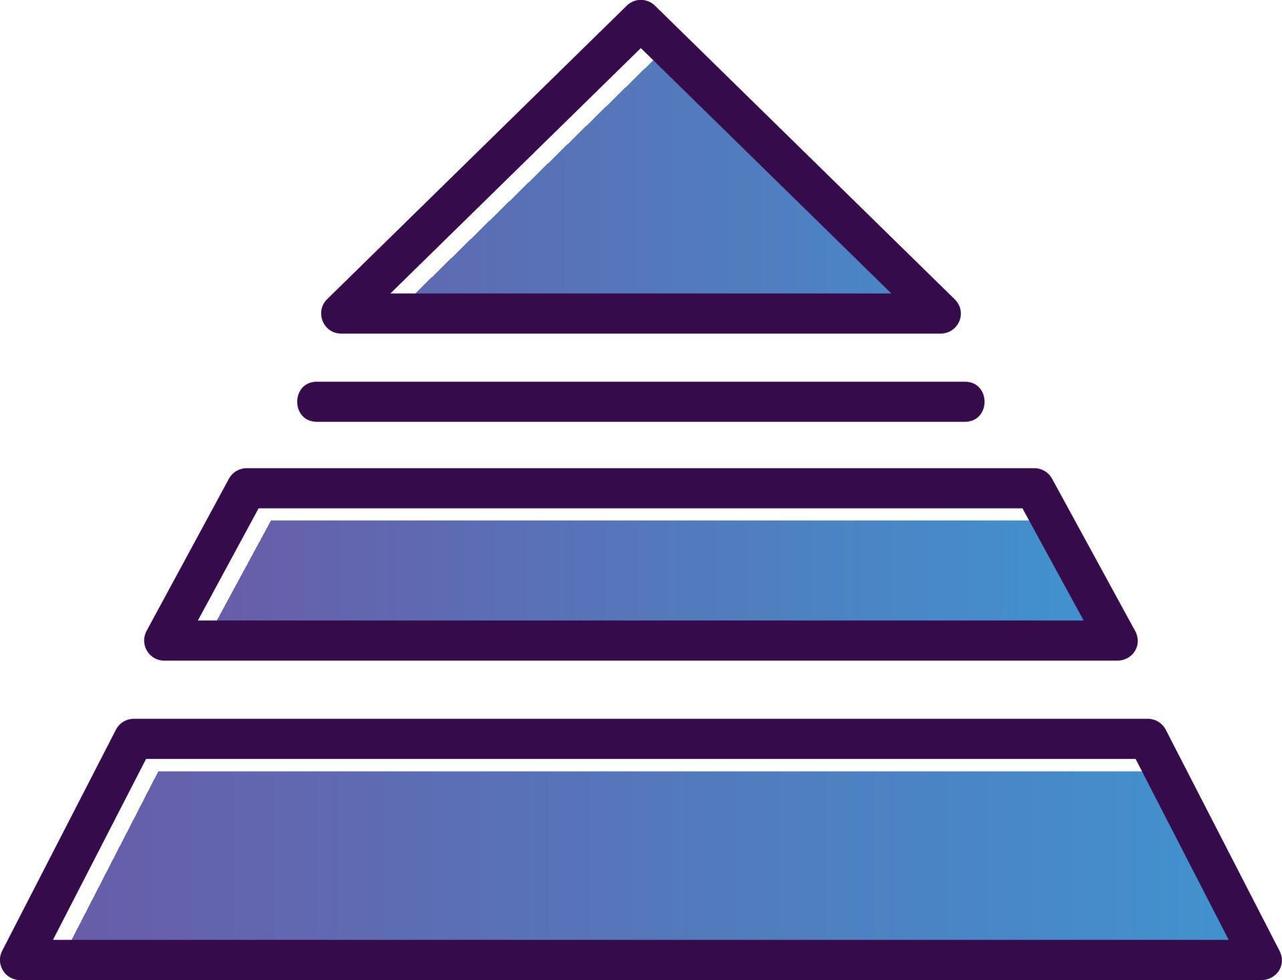 pyramid vektor ikon design